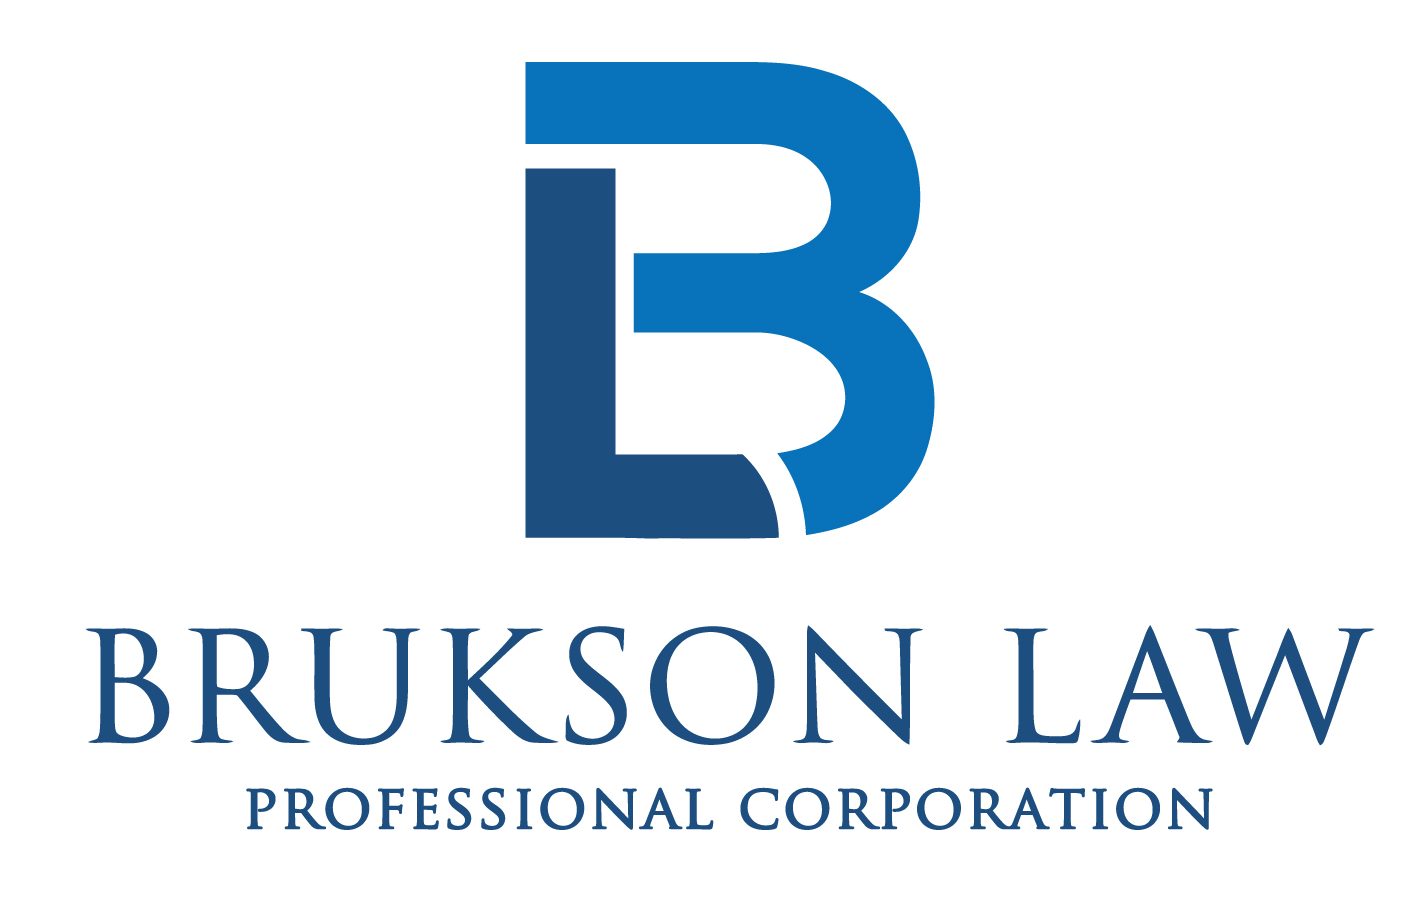 Brukson Law Professional Corporation